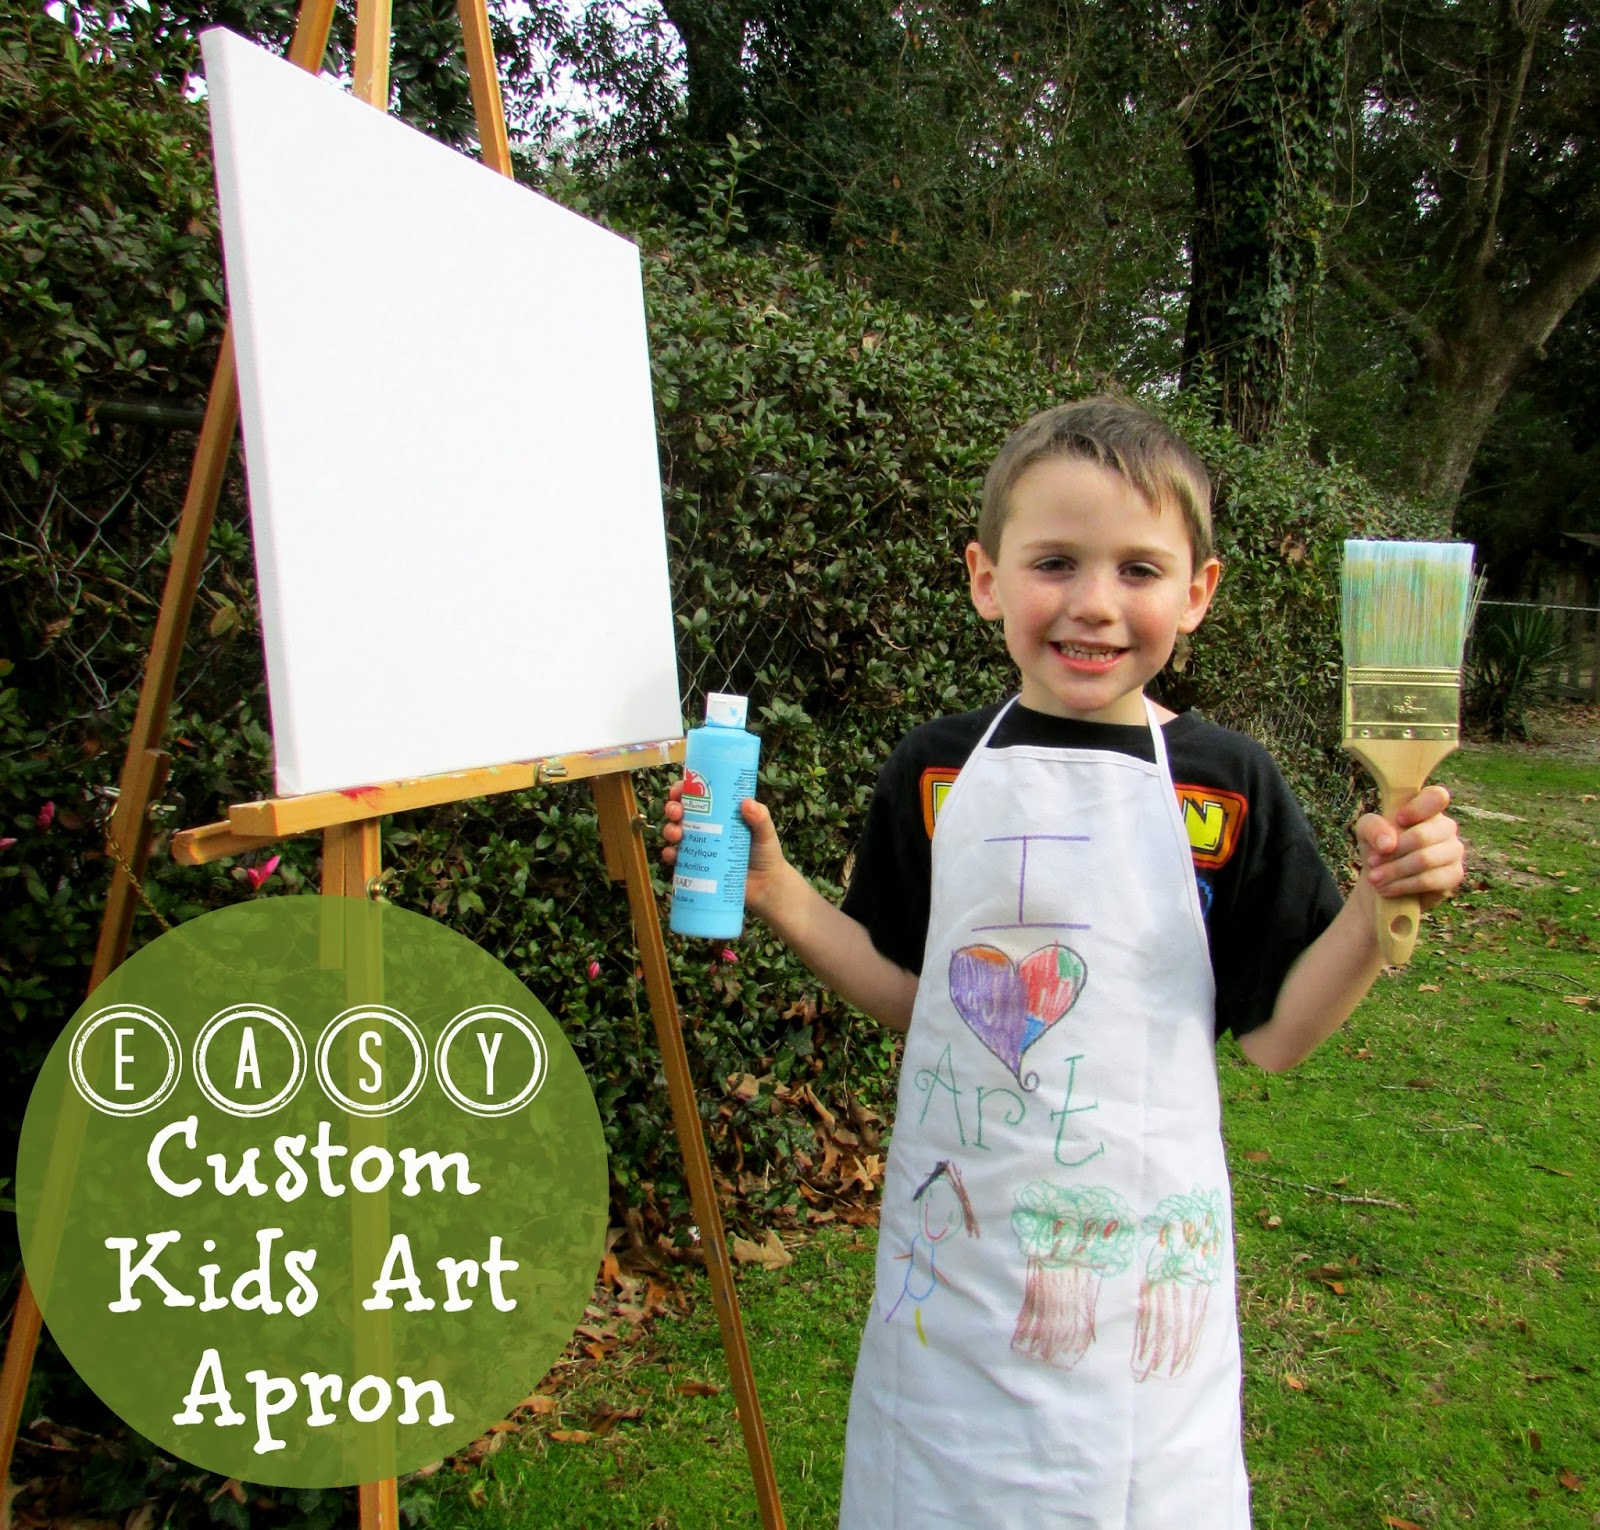 EASY Custom Kids Art Apron - Beauty Through Imperfection